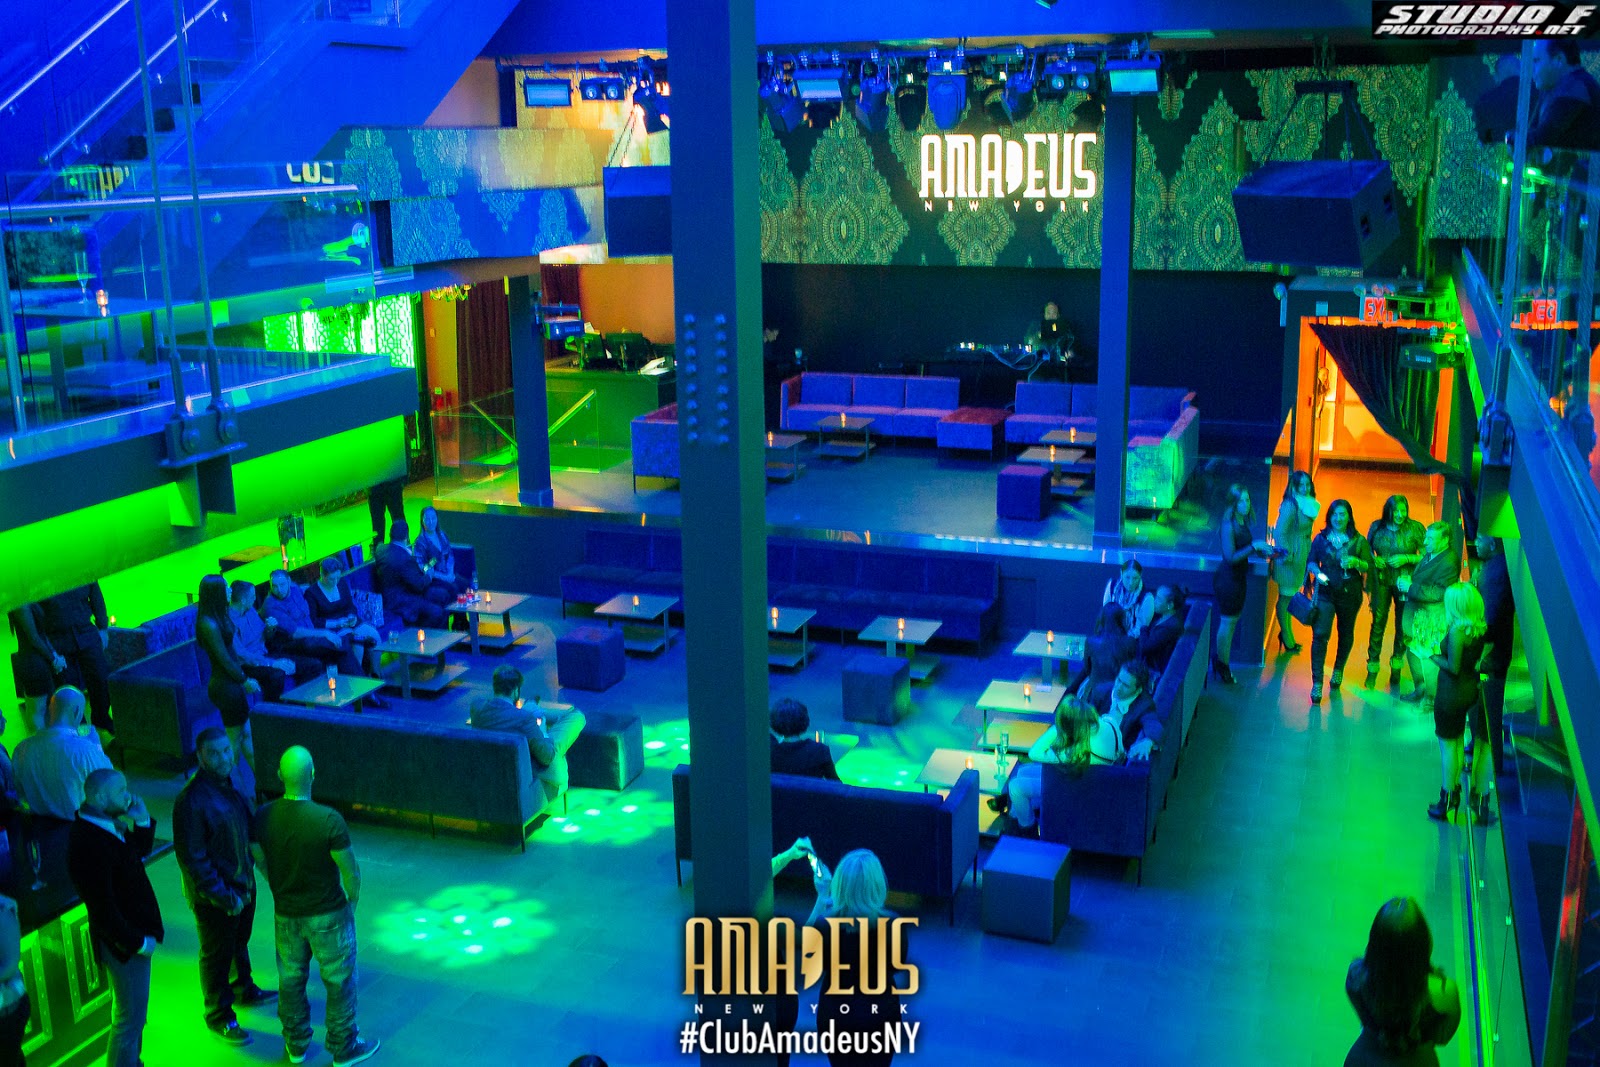 Photo of Amadeus NightClub in New York City, New York, United States - 3 Picture of Point of interest, Establishment, Night club